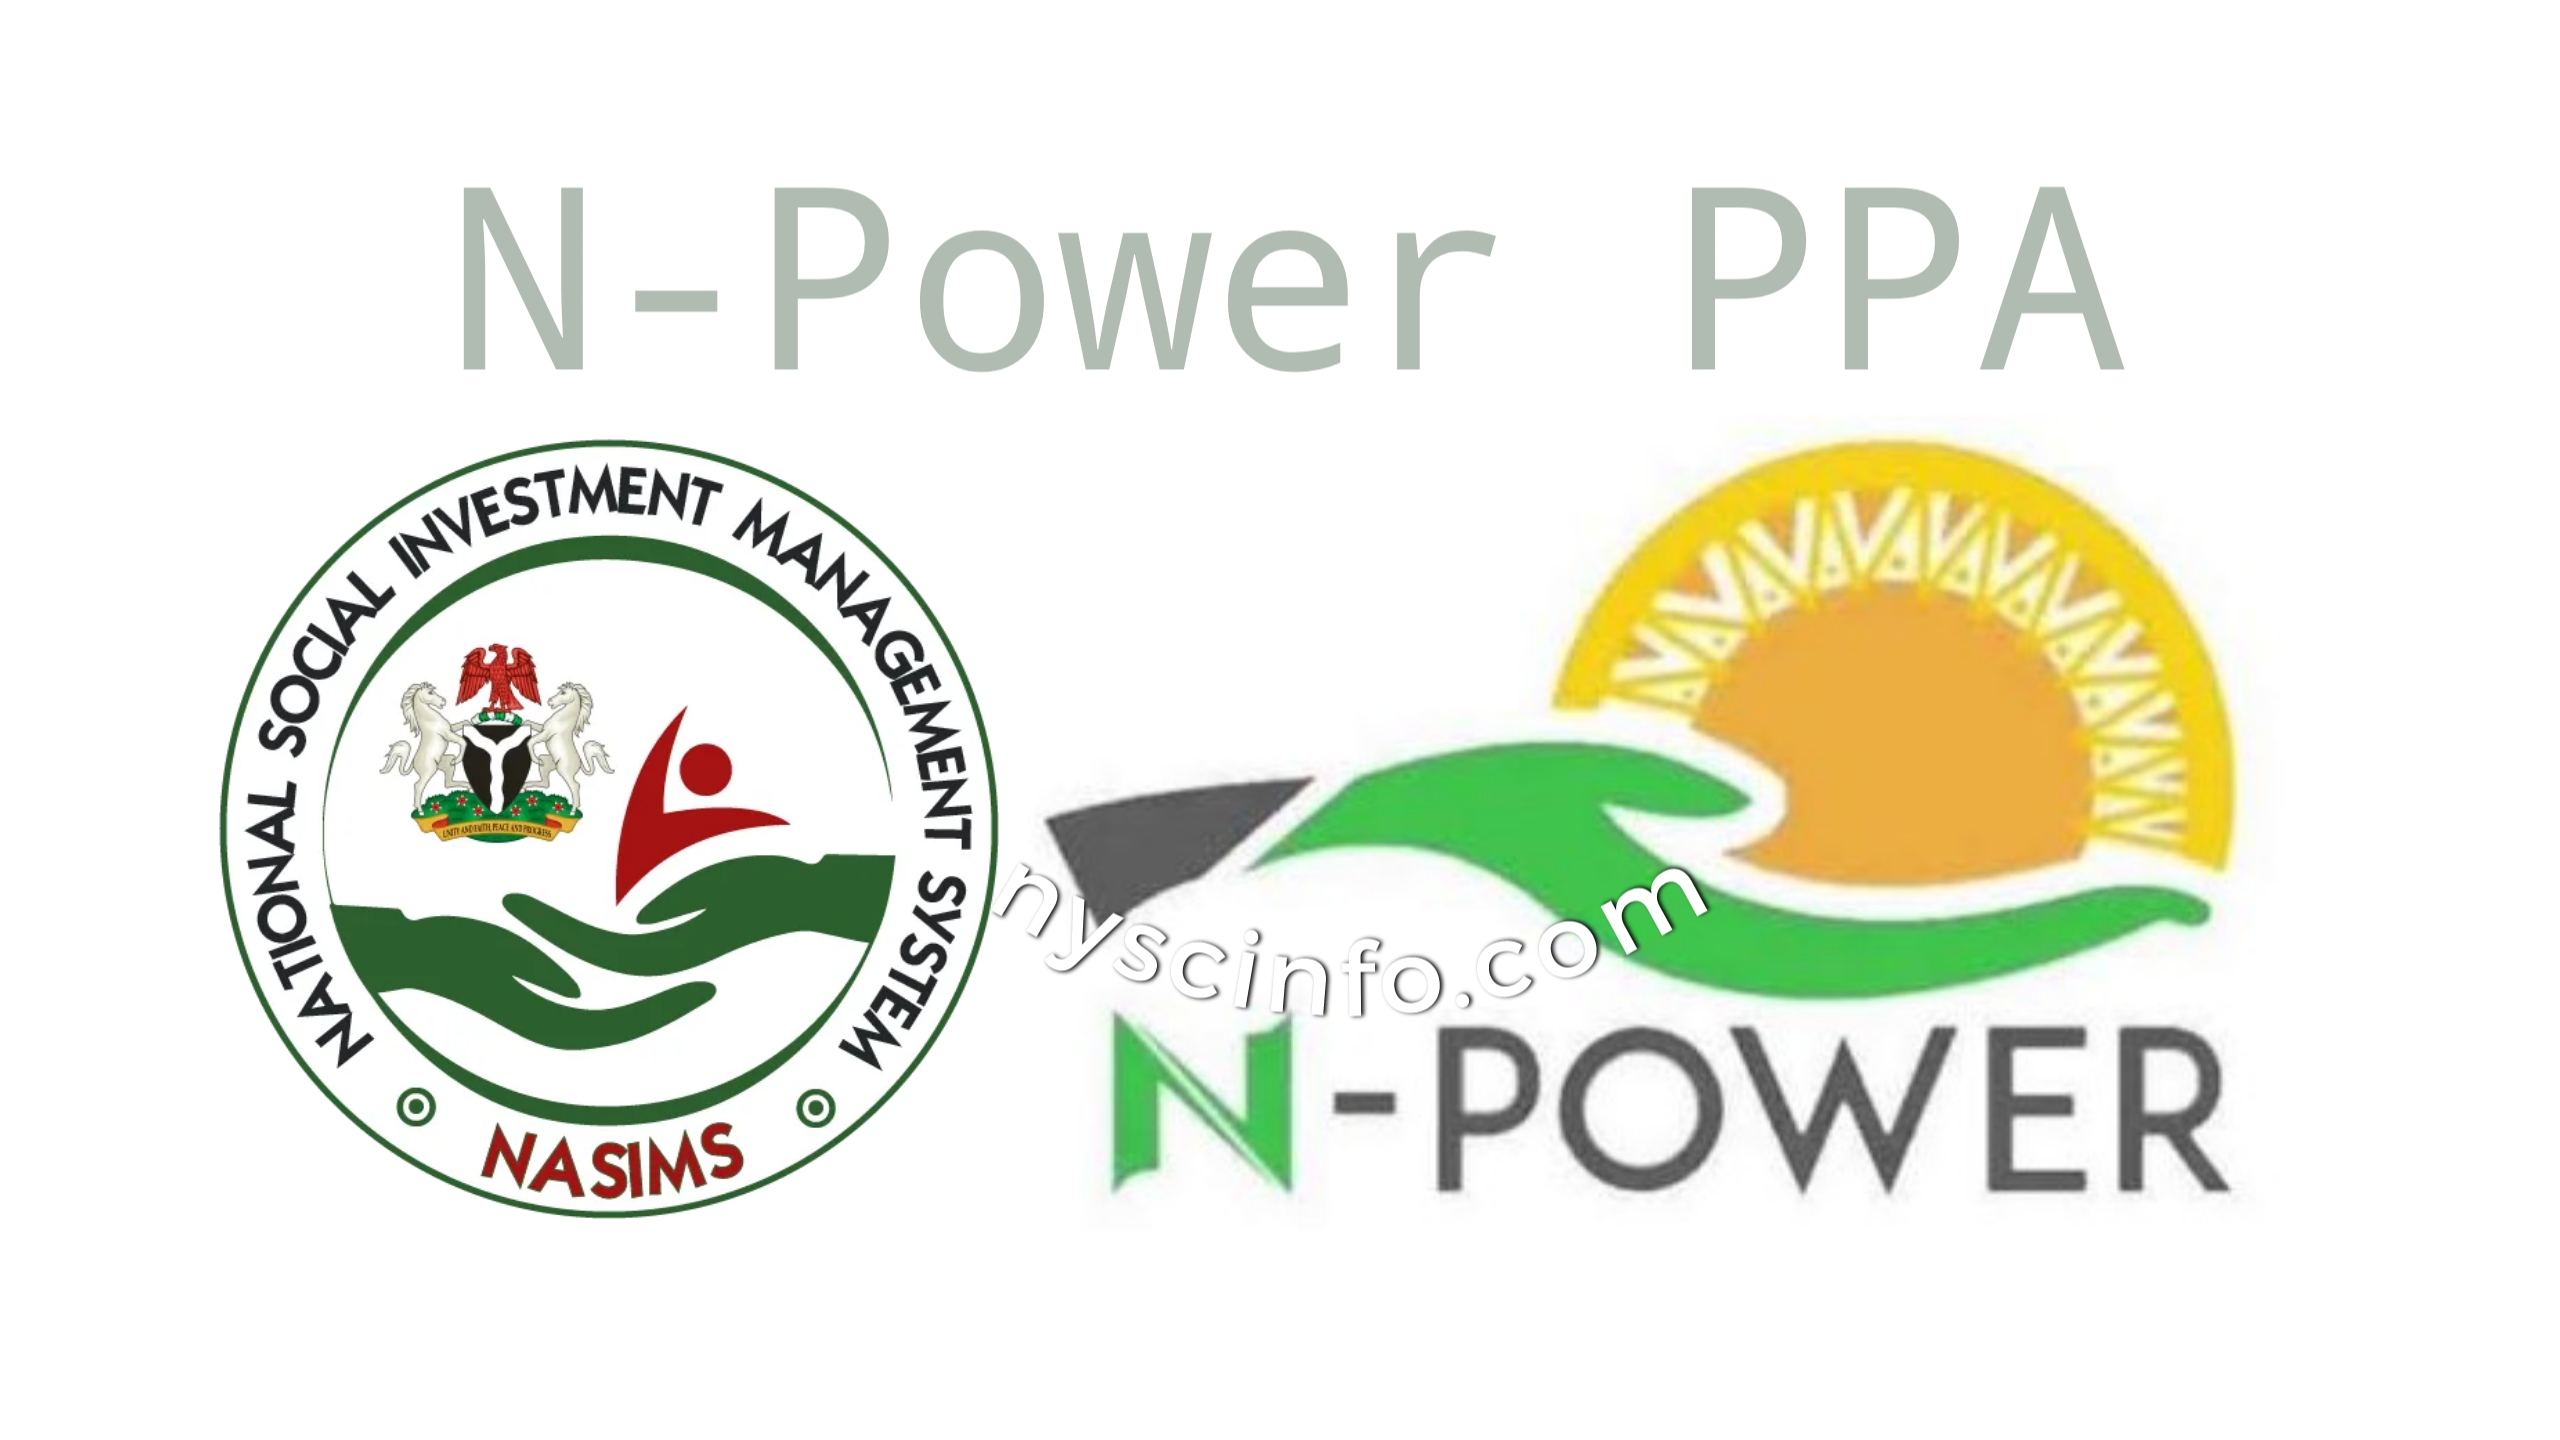 List of Npower PPA